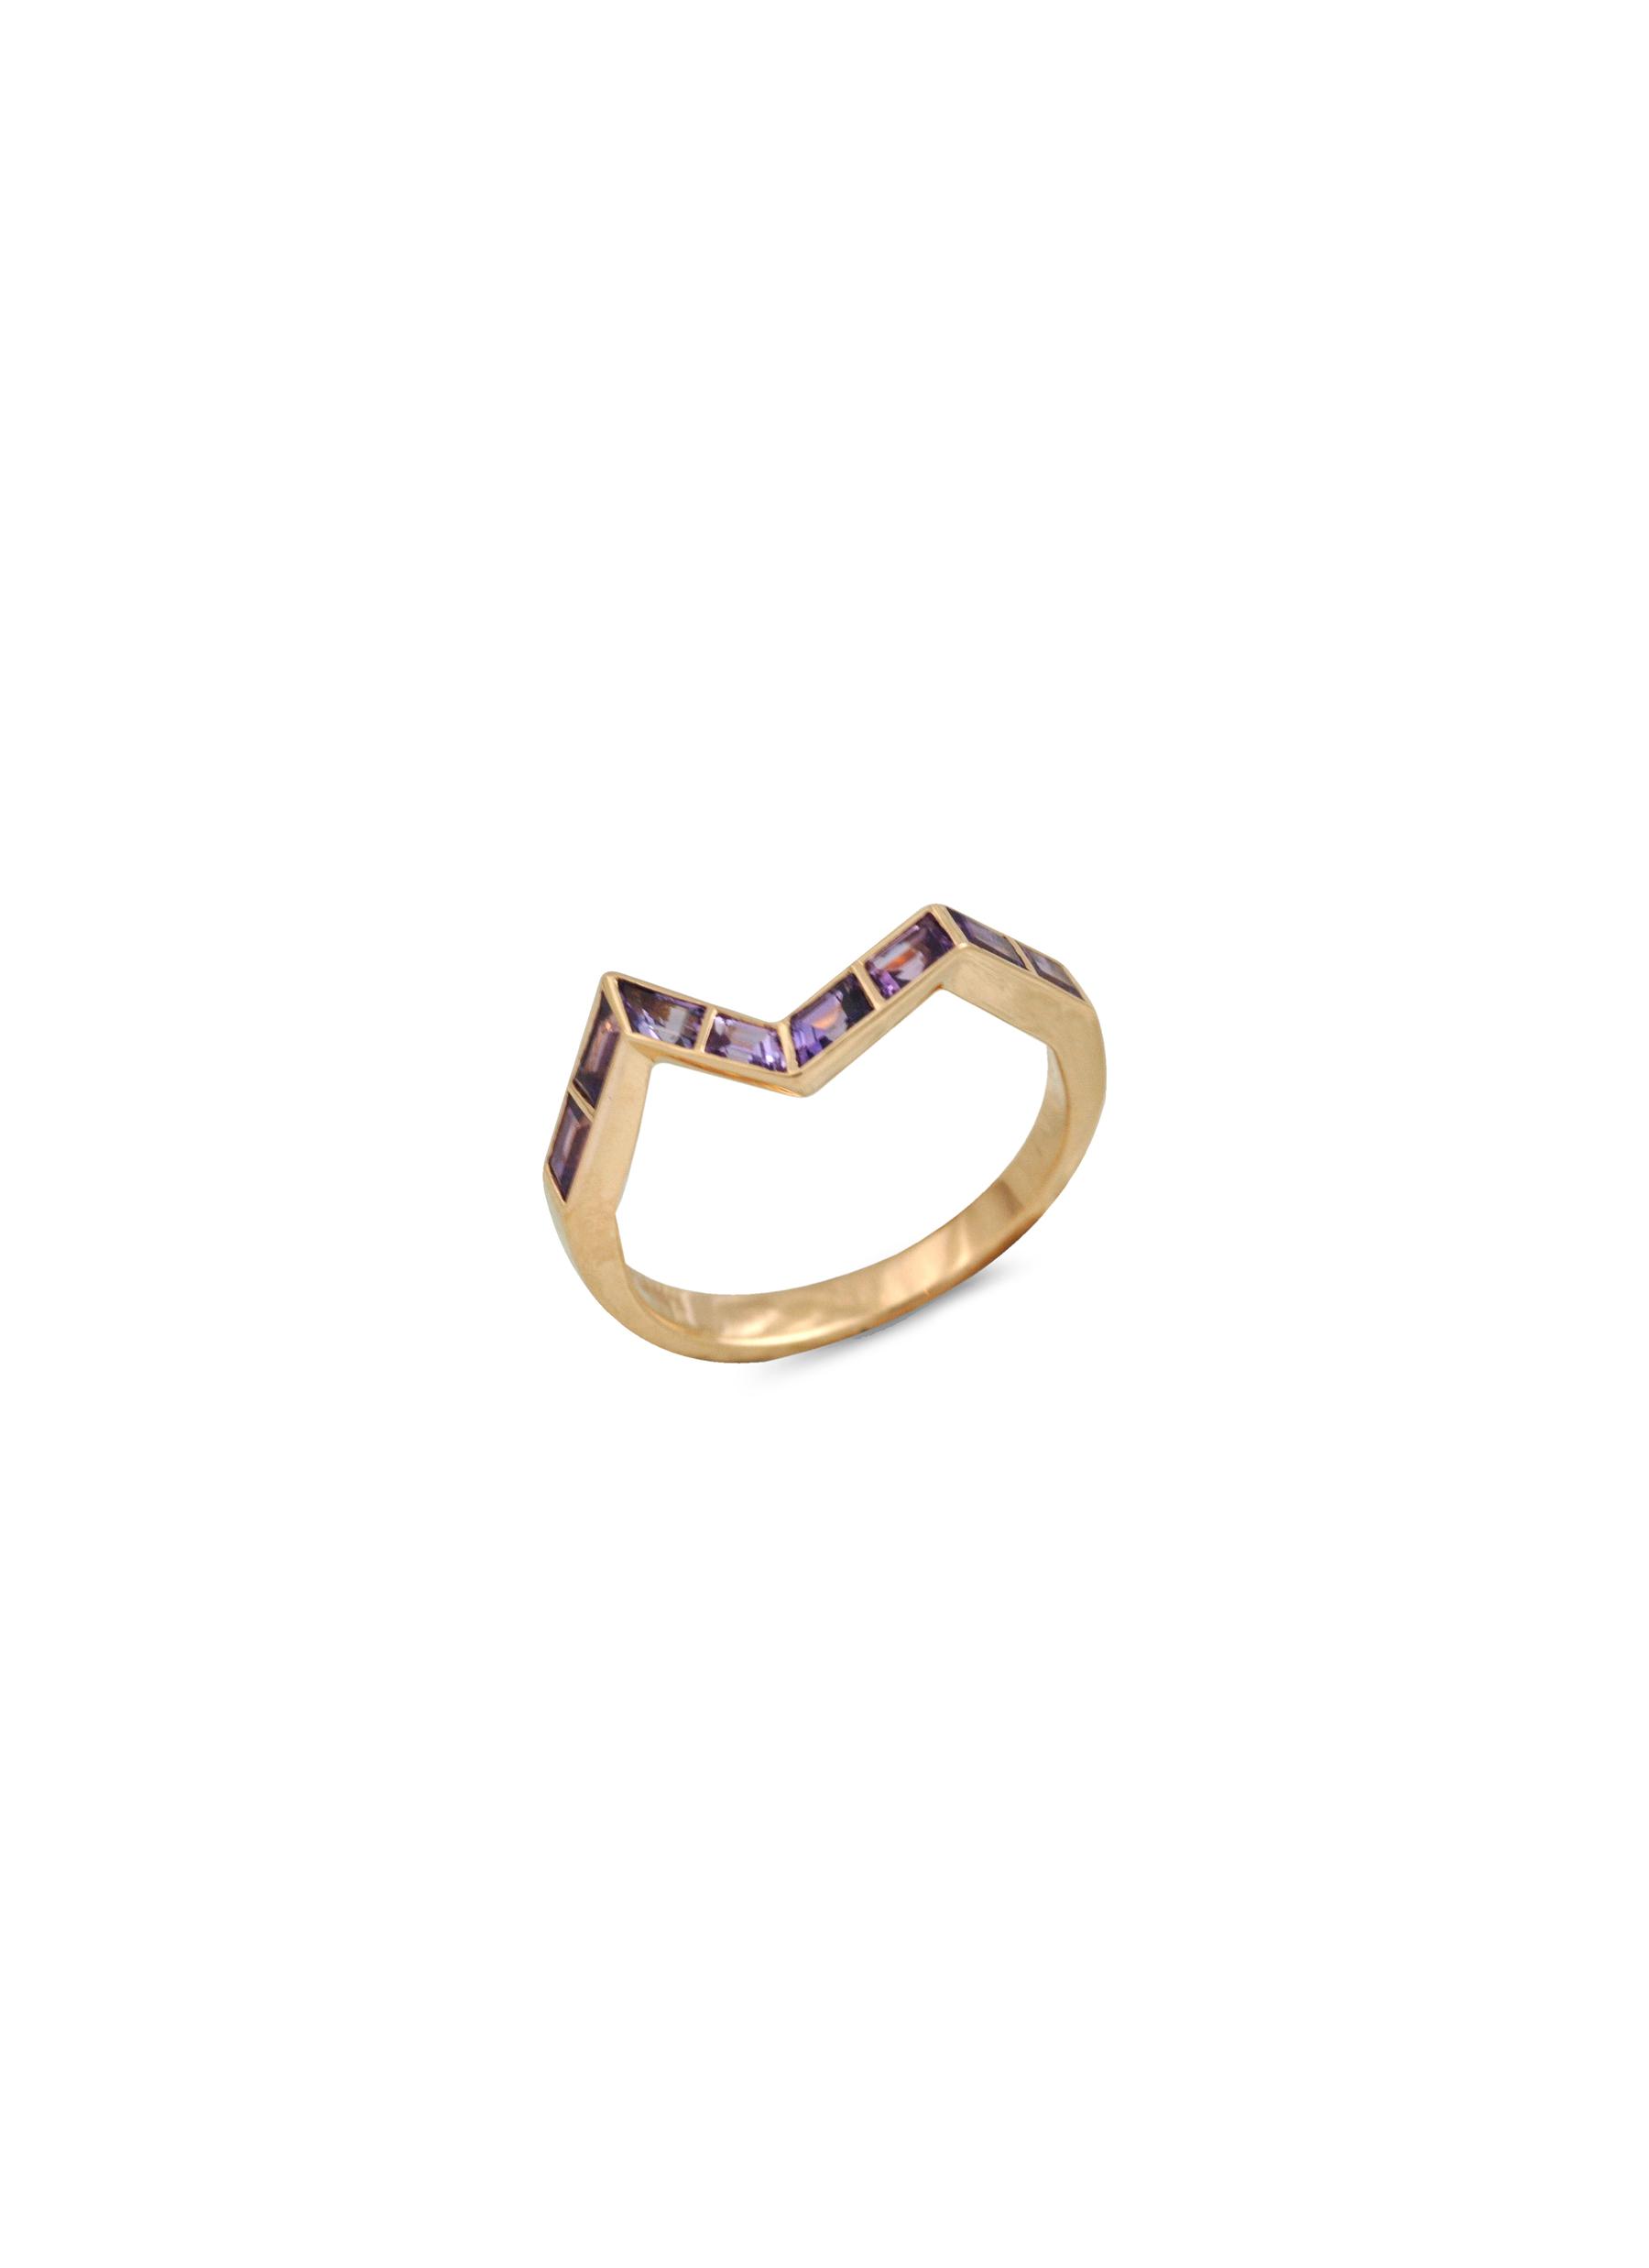 KAVANT & SHARART ‘Origami Ziggy' Purple Sapphire 18K Gold Step Ring